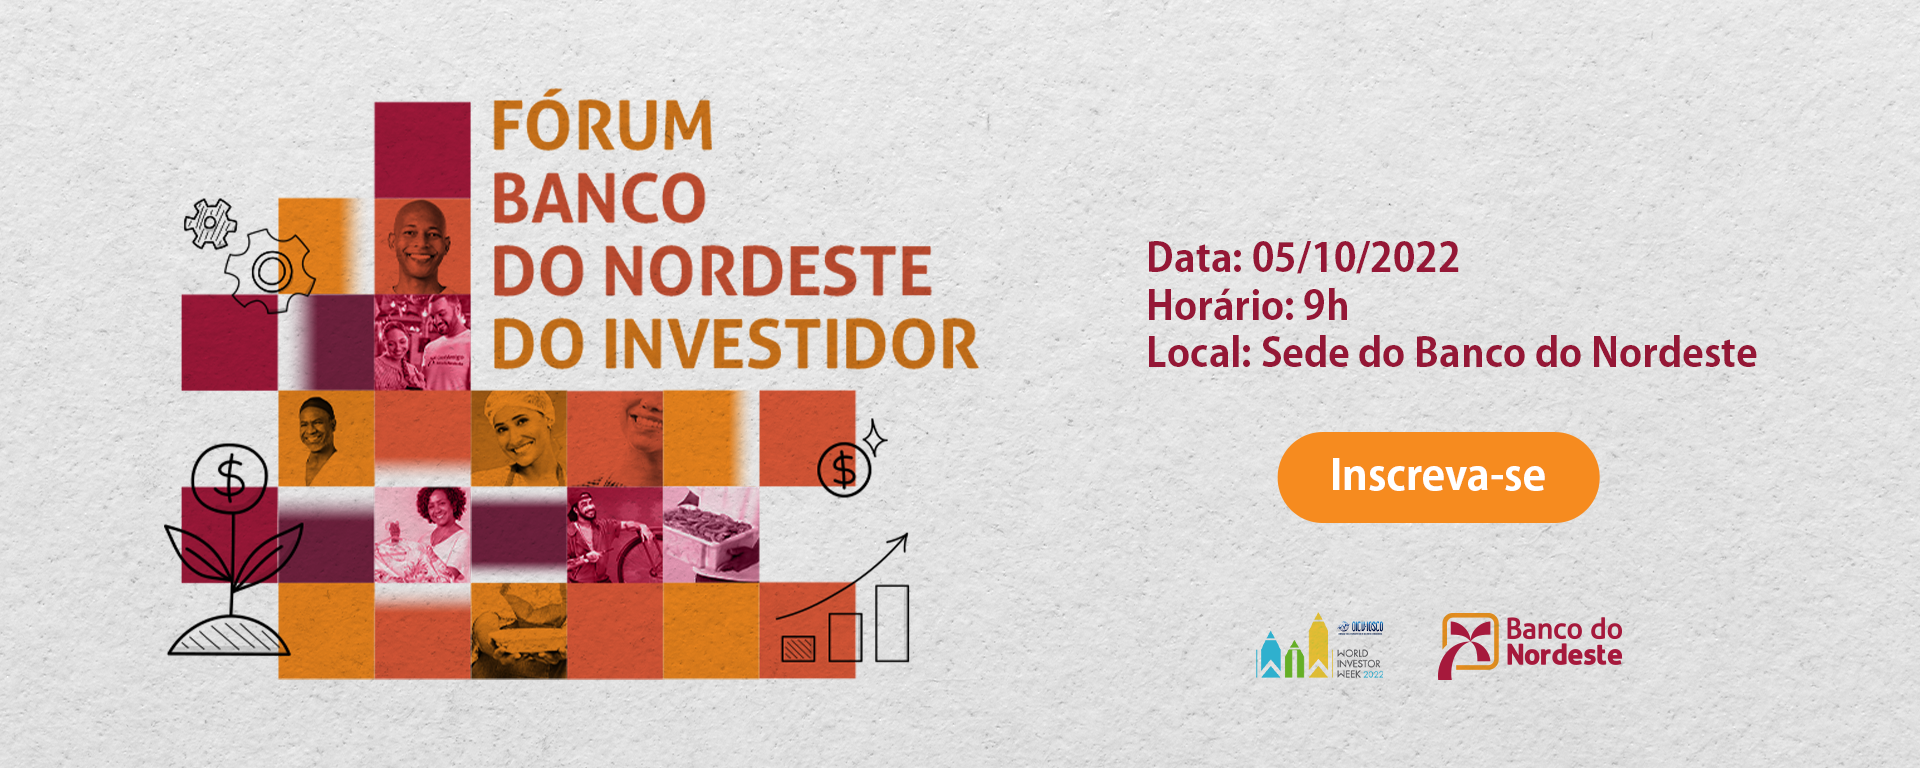 Fórum Banco do Nordeste do Investidor. Data: 05/10/2022. Horário: 9h. Local: Sede do Banco do Nordeste. Inscreva-se.